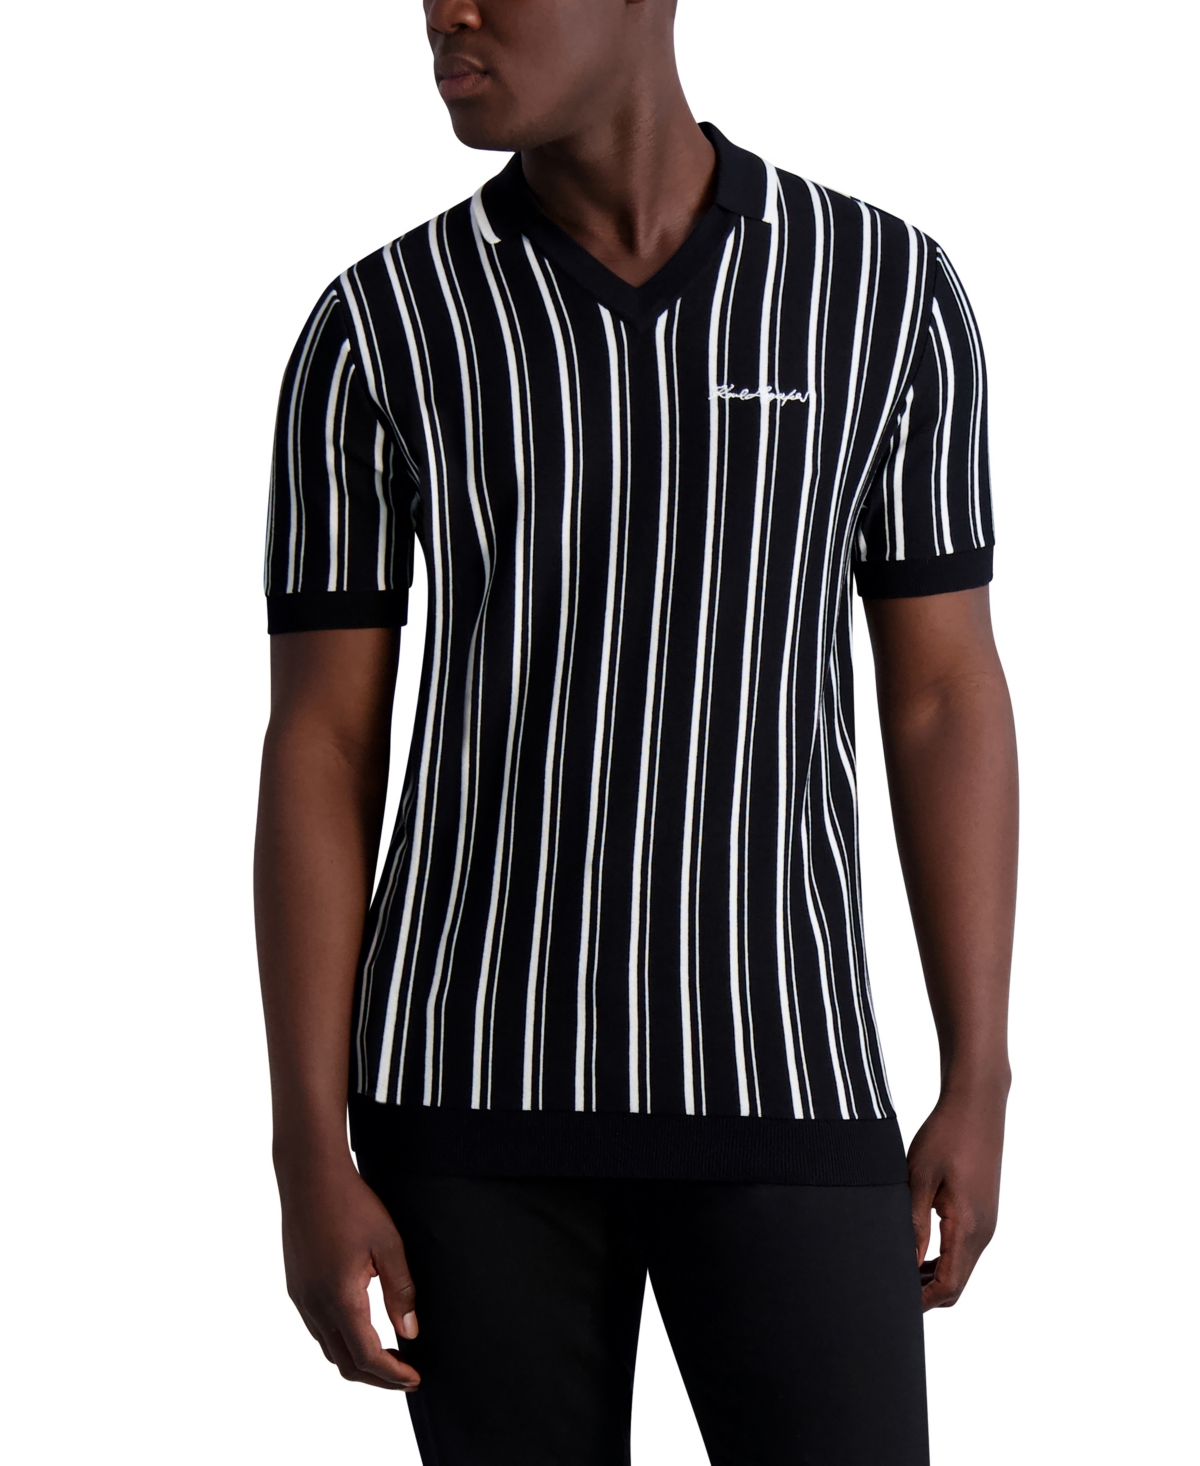 Karl Lagerfeld Men's V-neck Striped Sweater Polo Shirt with Logo - Black, White